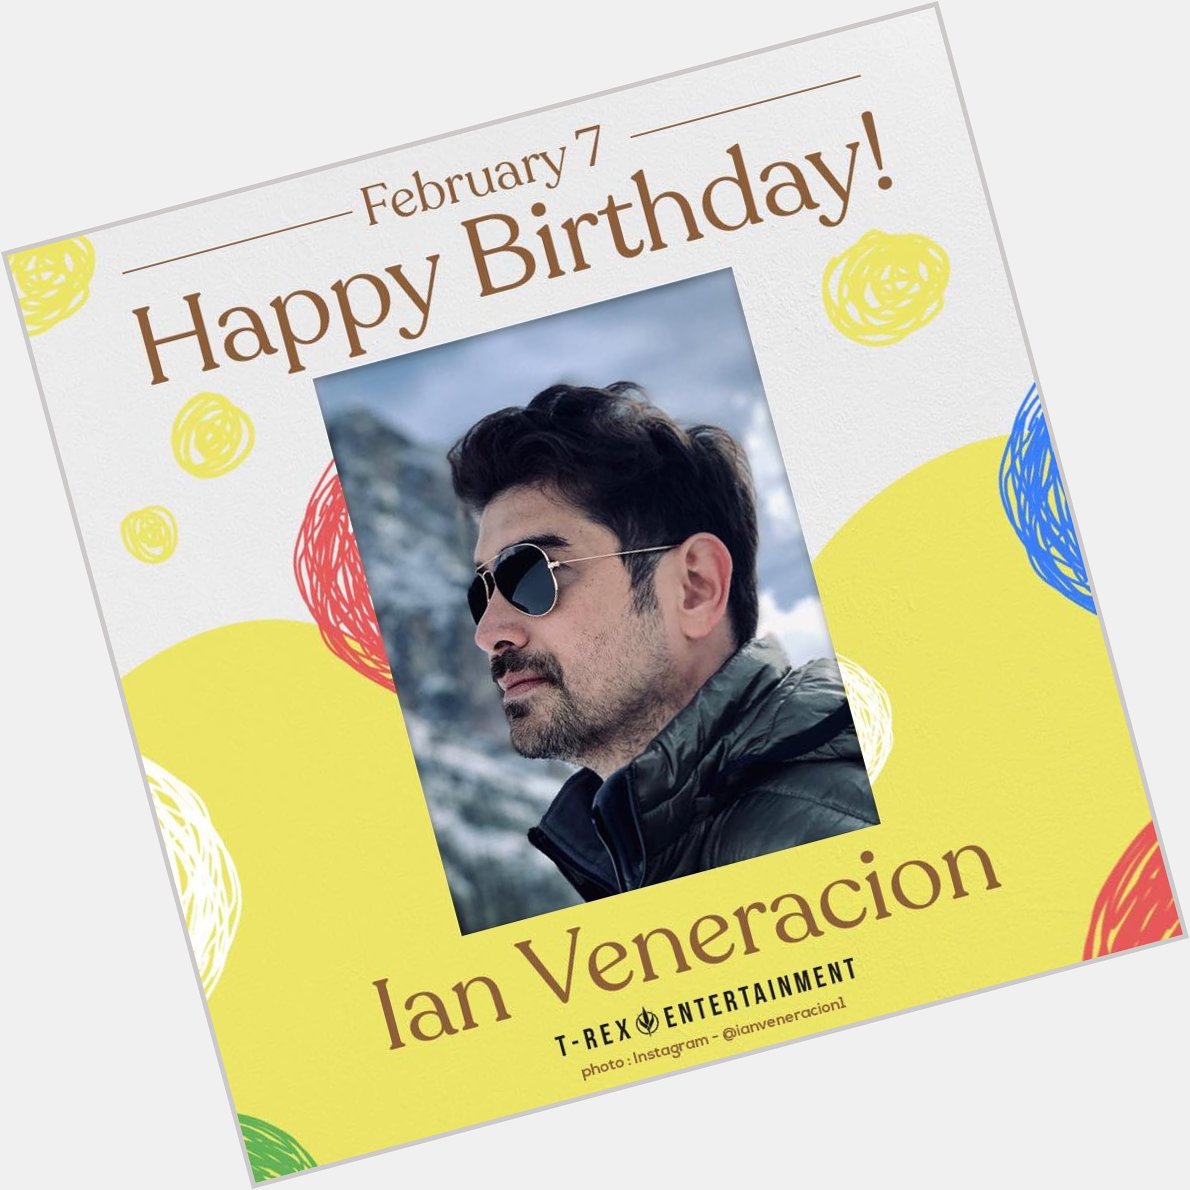 Happy birthday, Ian Veneracion! We wish you happiness in life.   